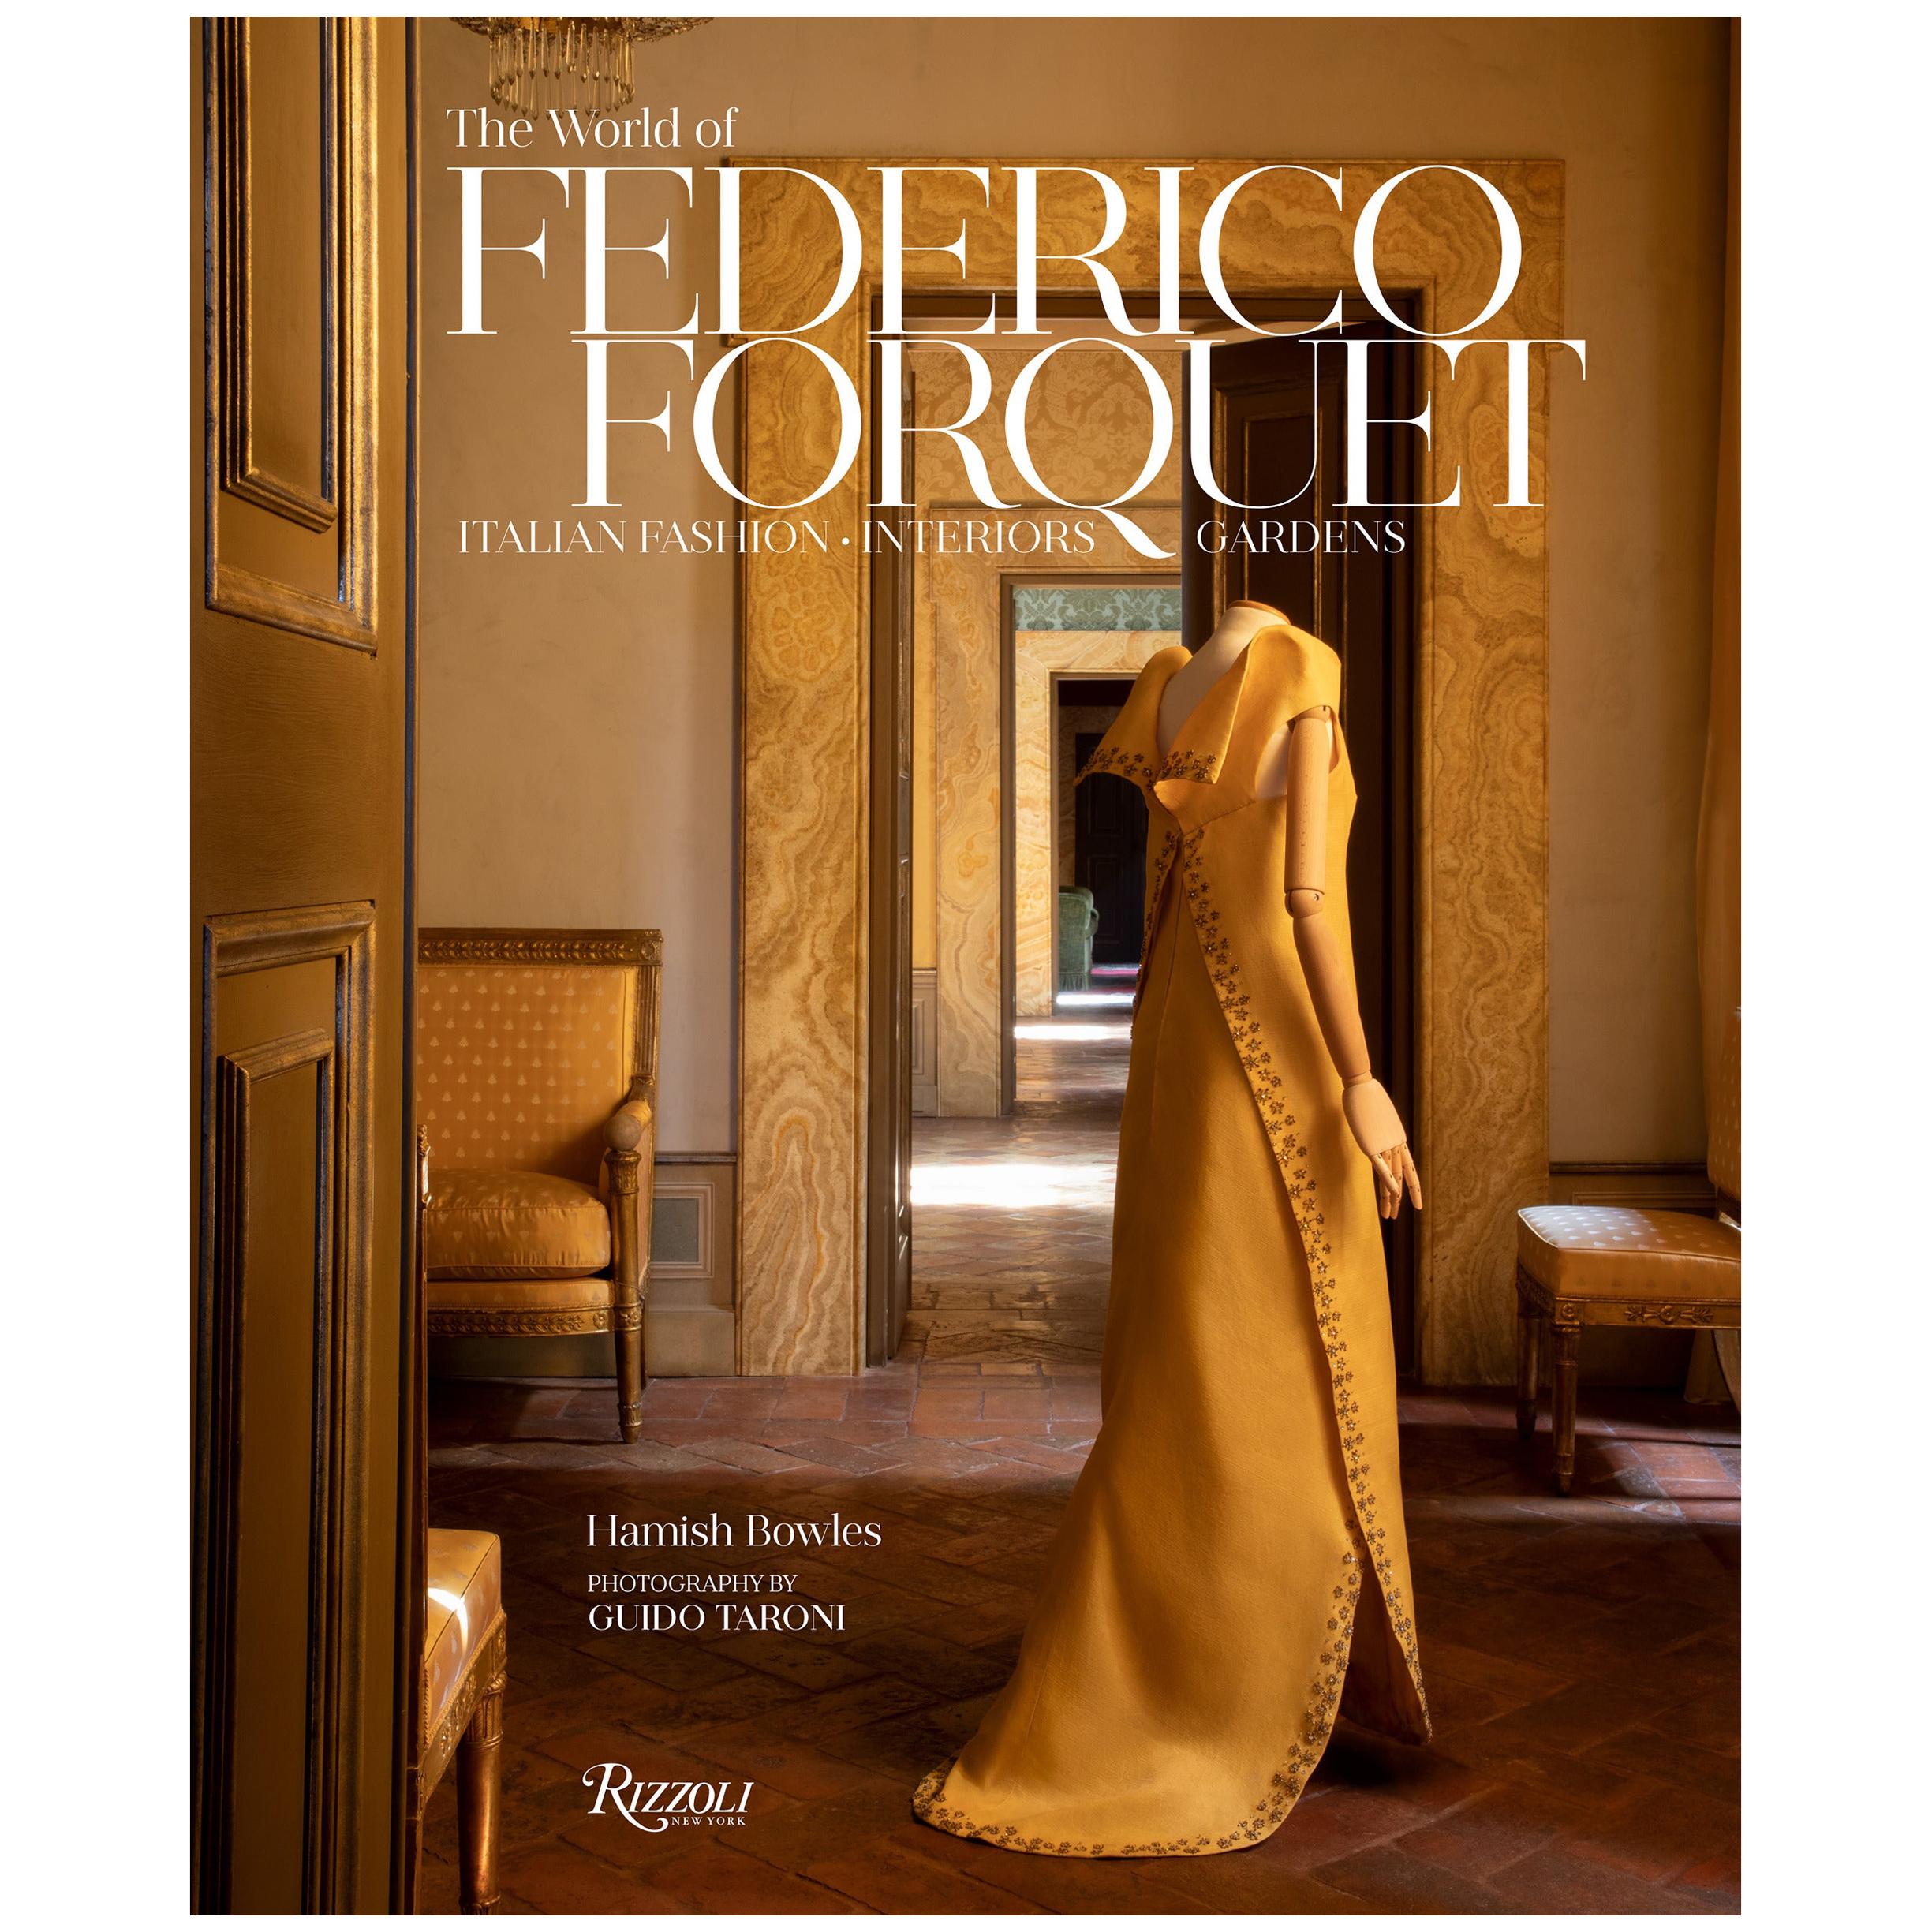 World of Federico Forquet Italian Fashion, Interiors, Gardens